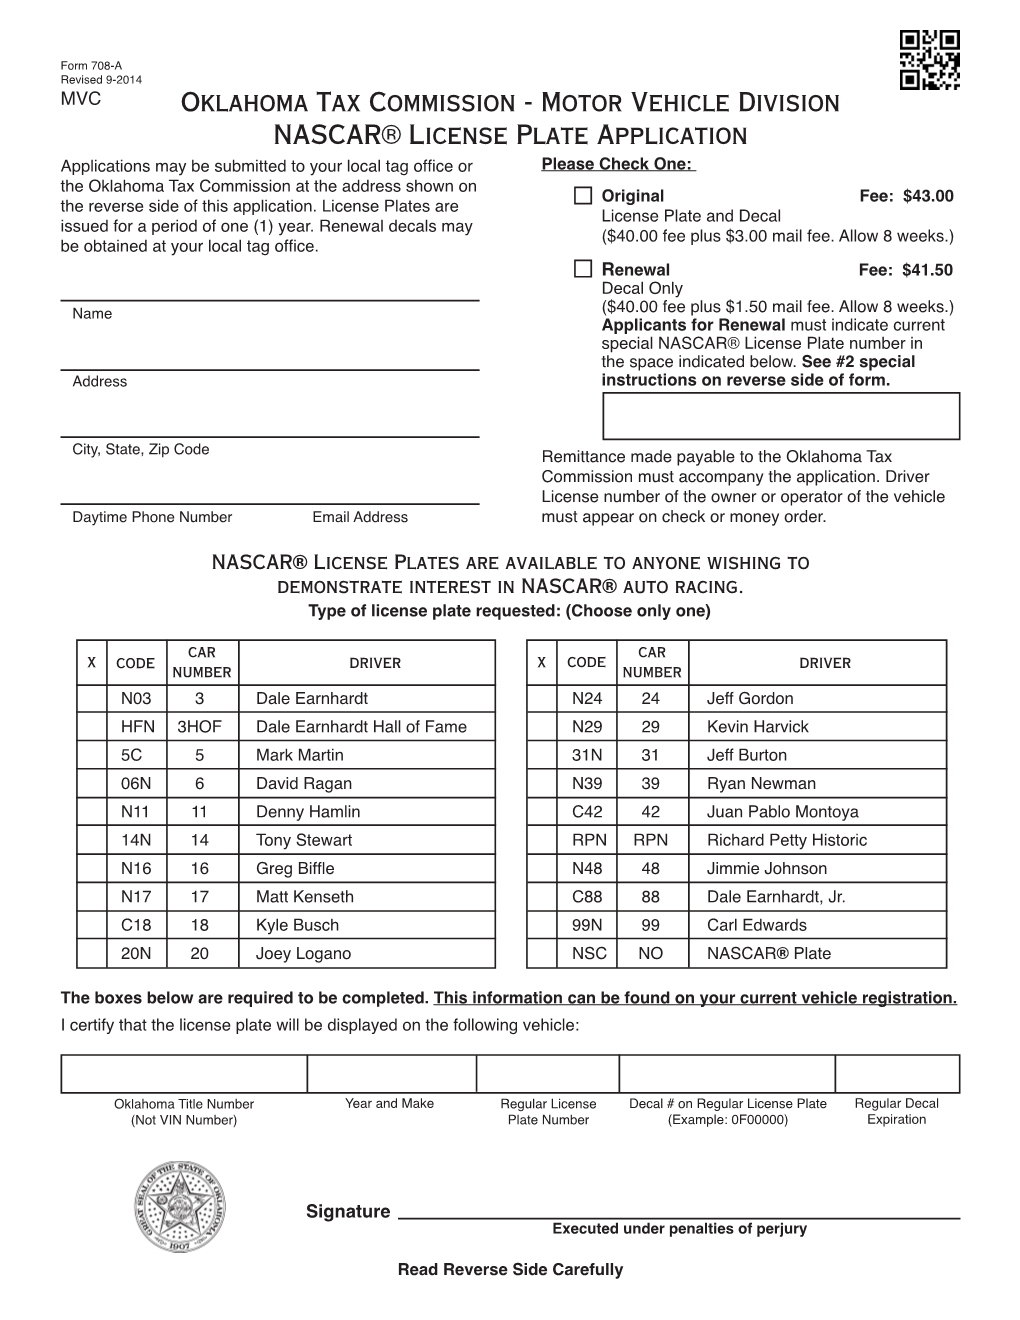 Motor Vehicle Division NASCAR® License